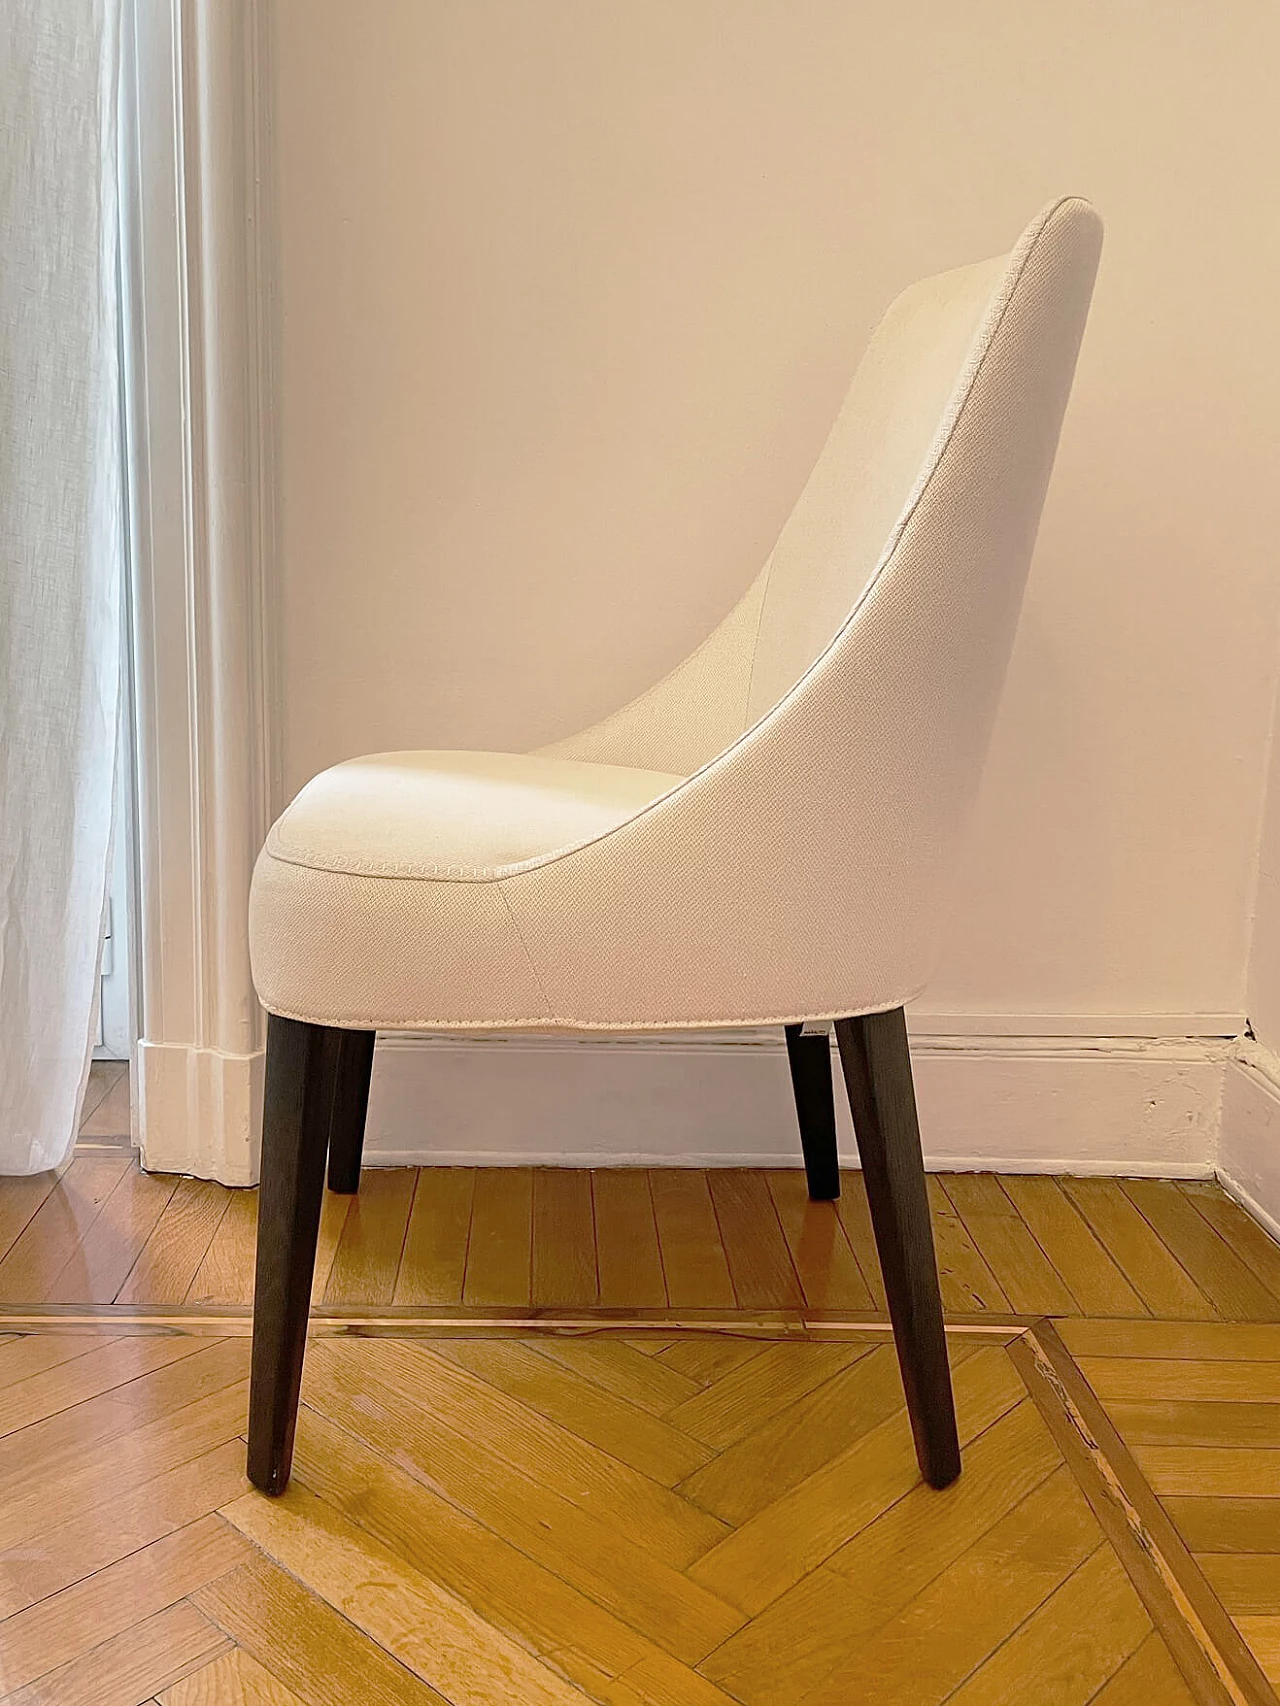 4 Febo Apta chairs by Antonio Citterio for Maxalto, B&B Italia, 2012 1367206